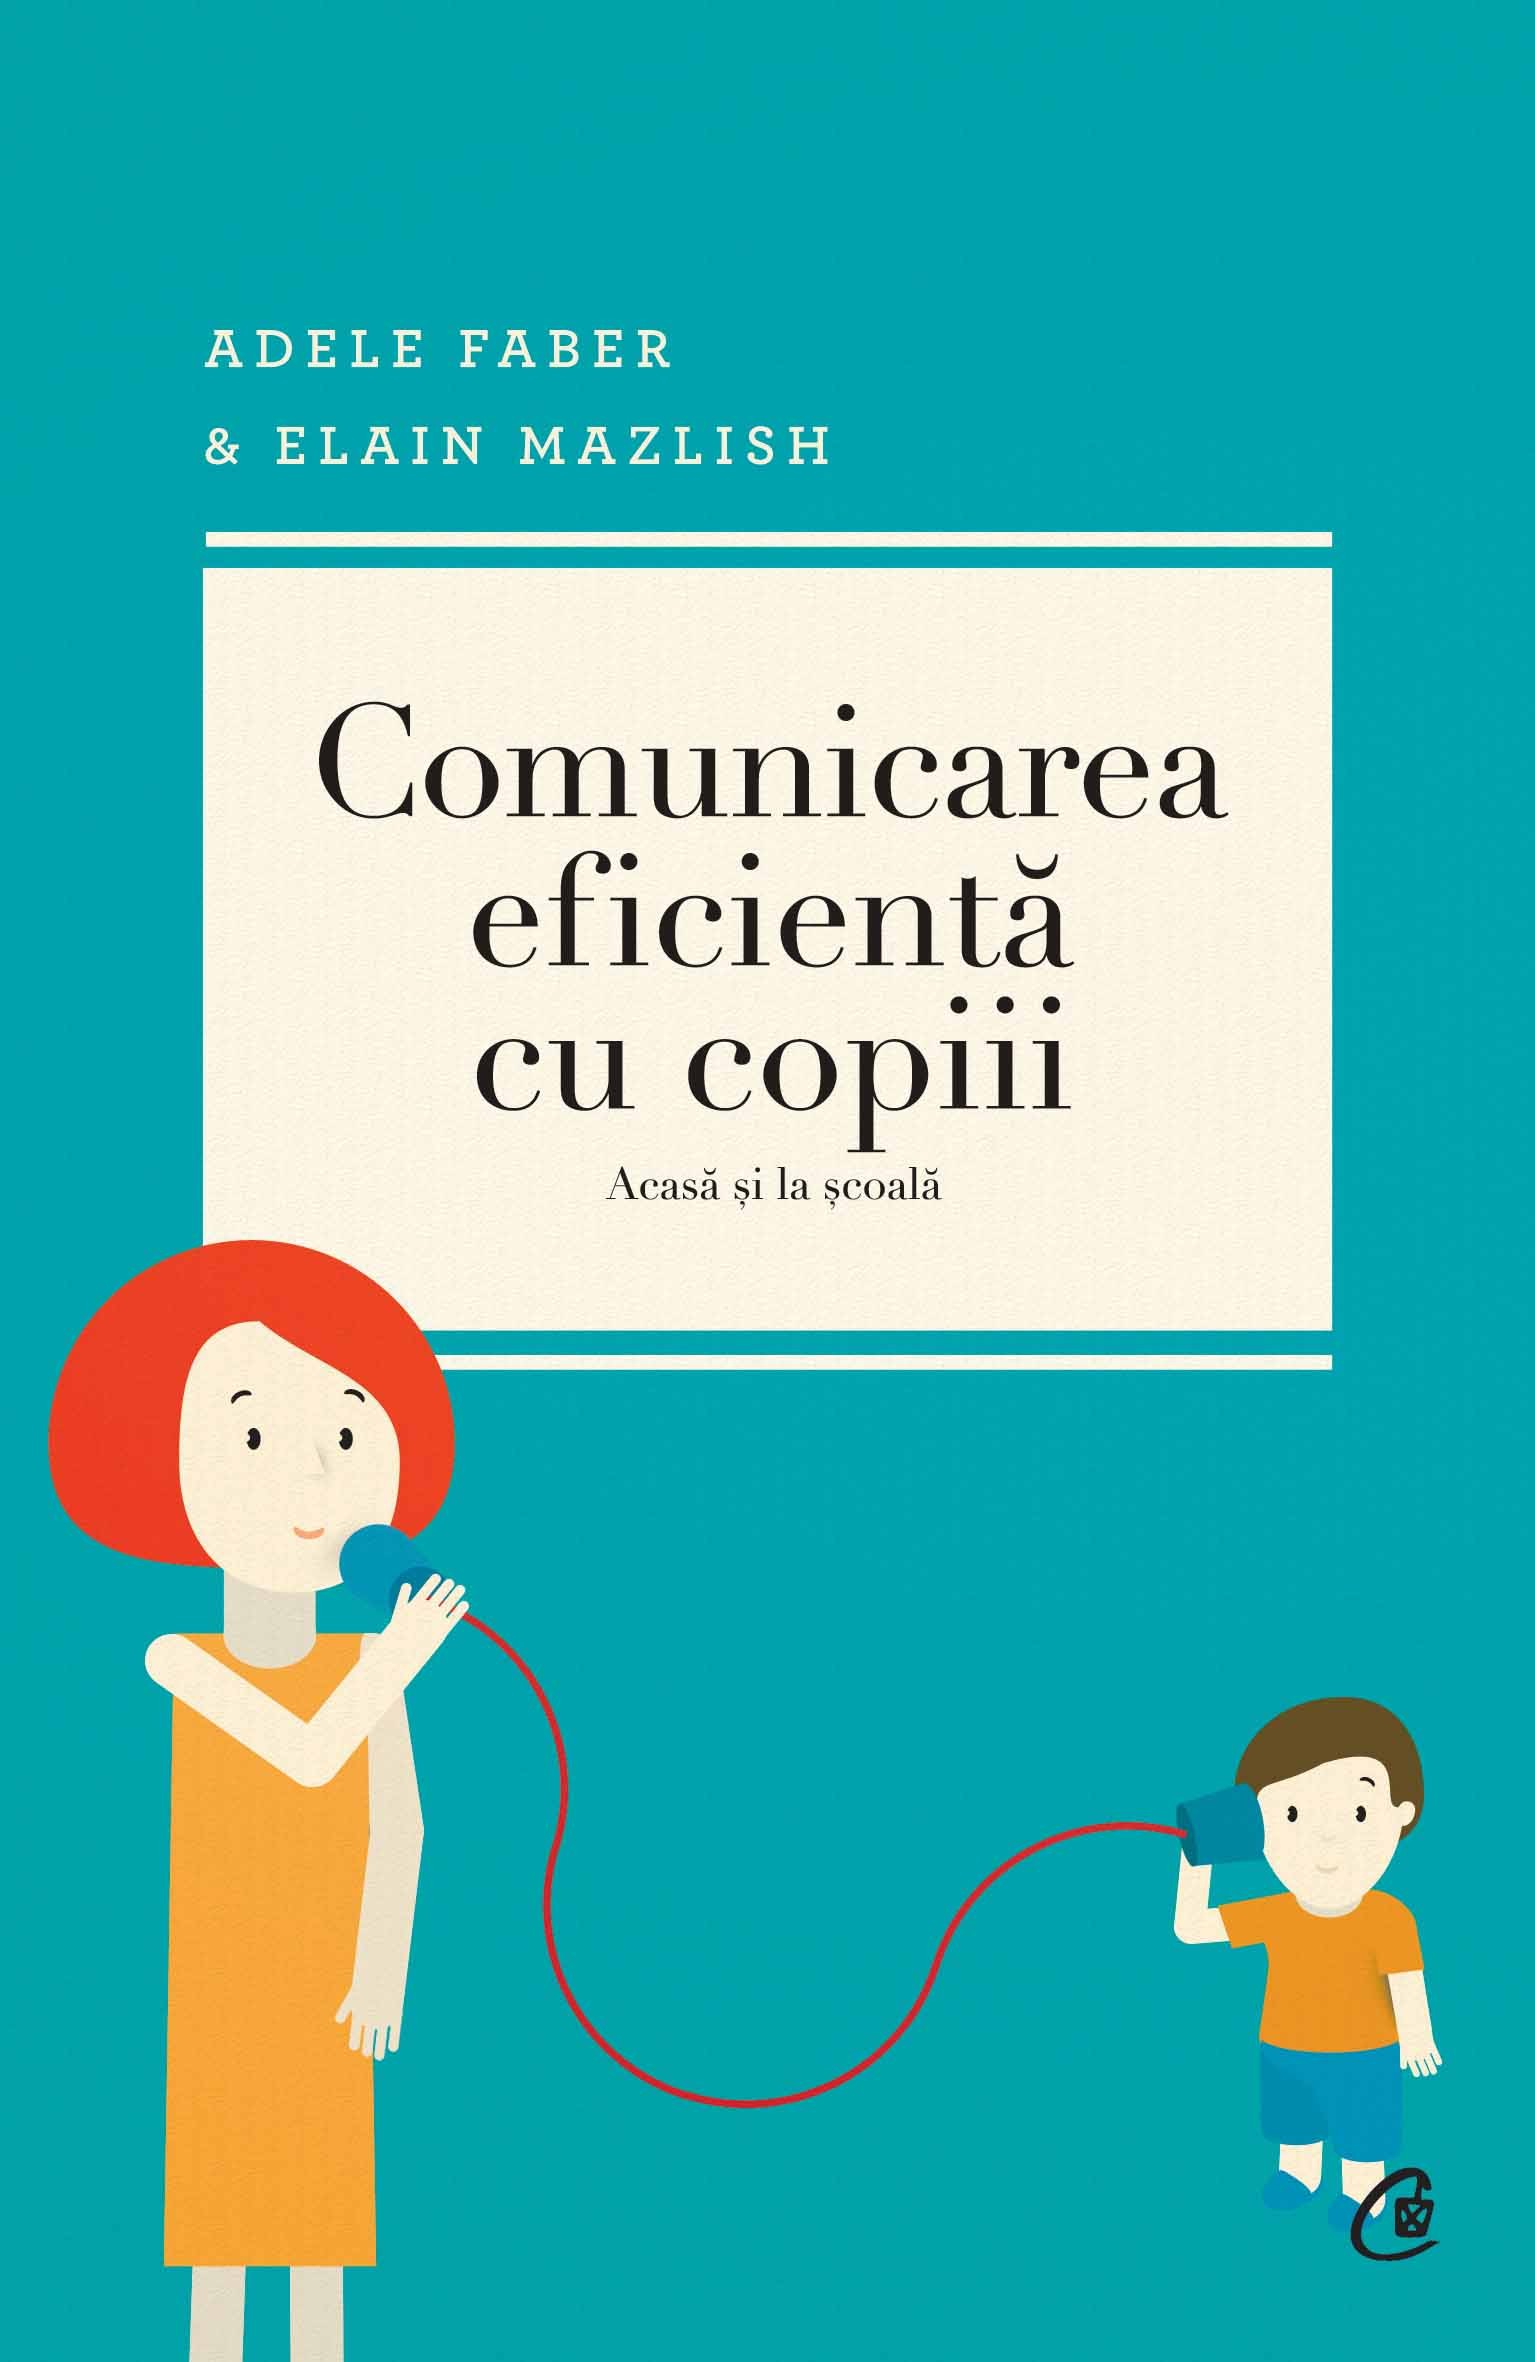 Comunicarea eficienta cu copiii ed.2013 - Adele Faber , Elaine Mazlish